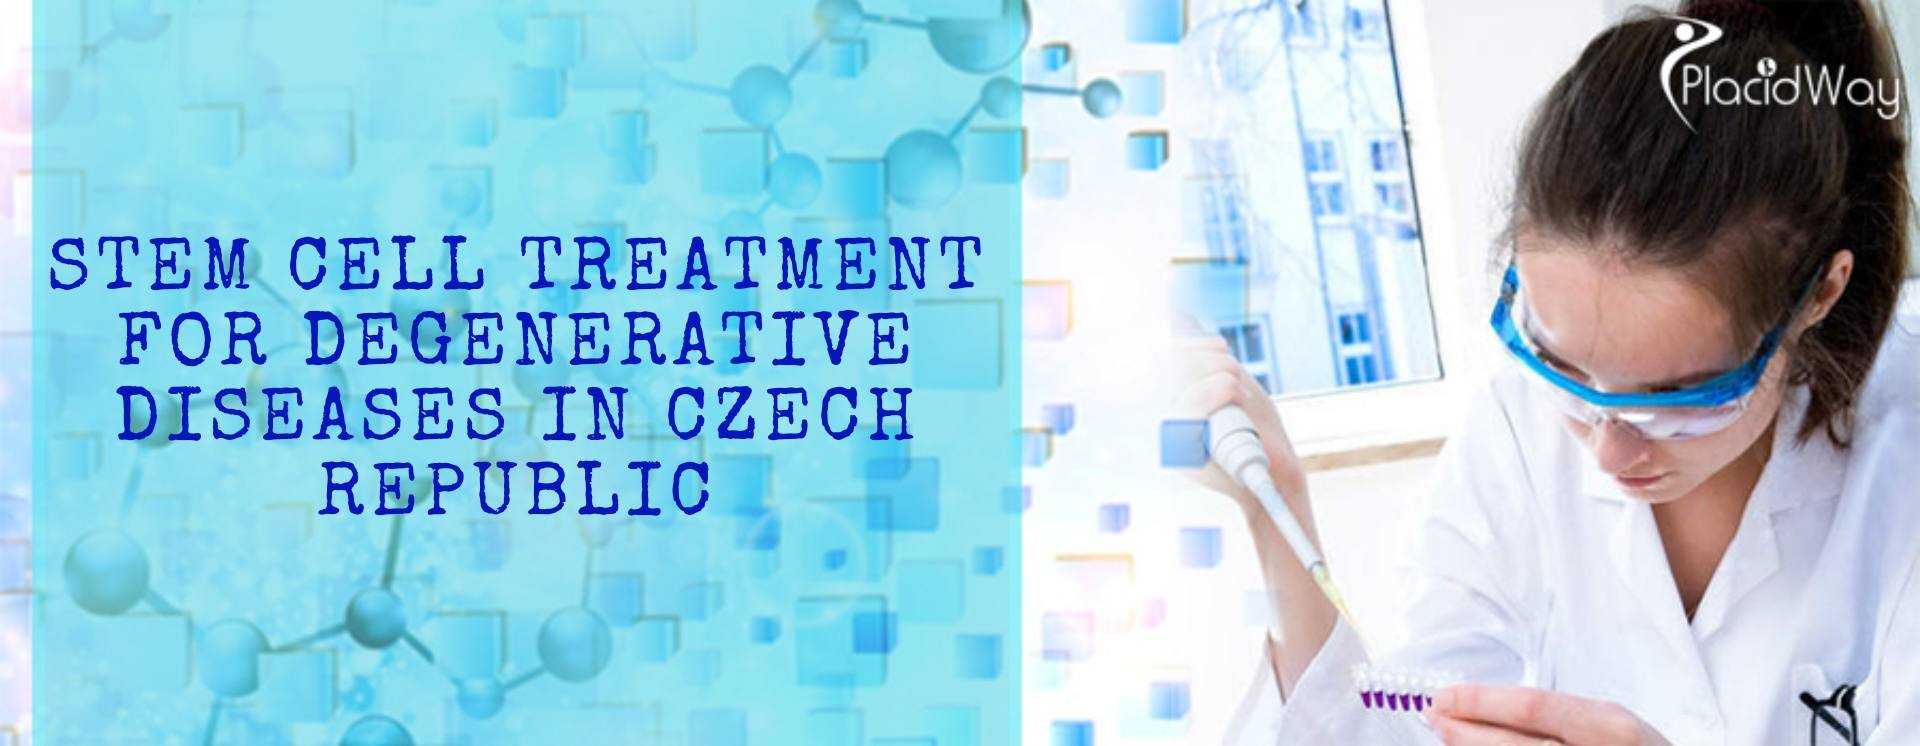 Stem Cell Treatment for Degenerative Diseases in Czech Republic